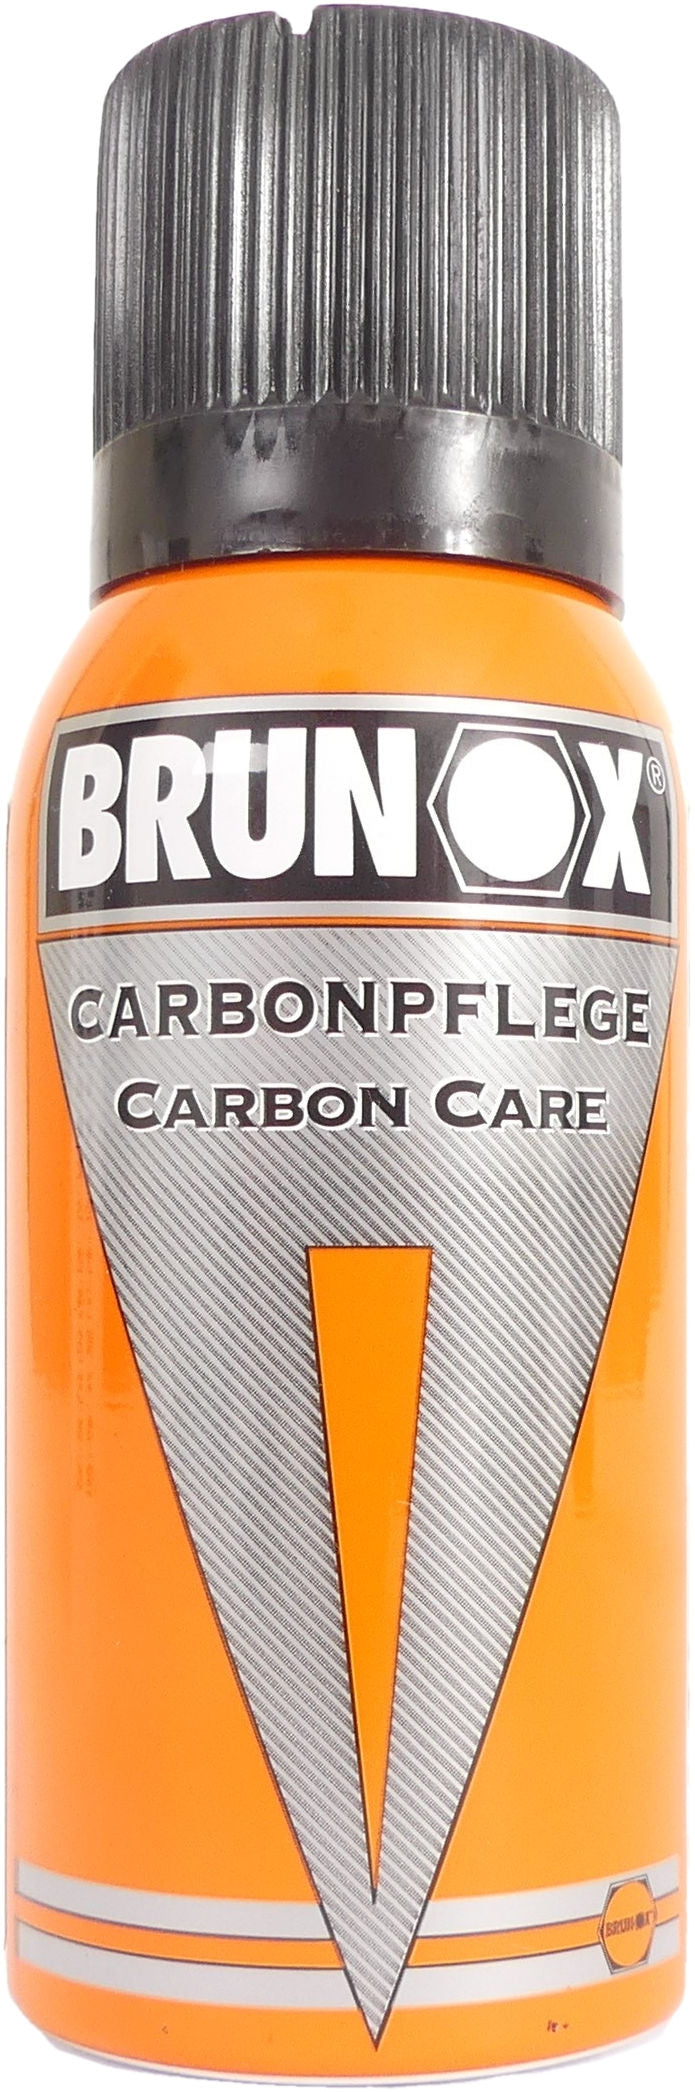 Brunox flacon Carbon care 120ml